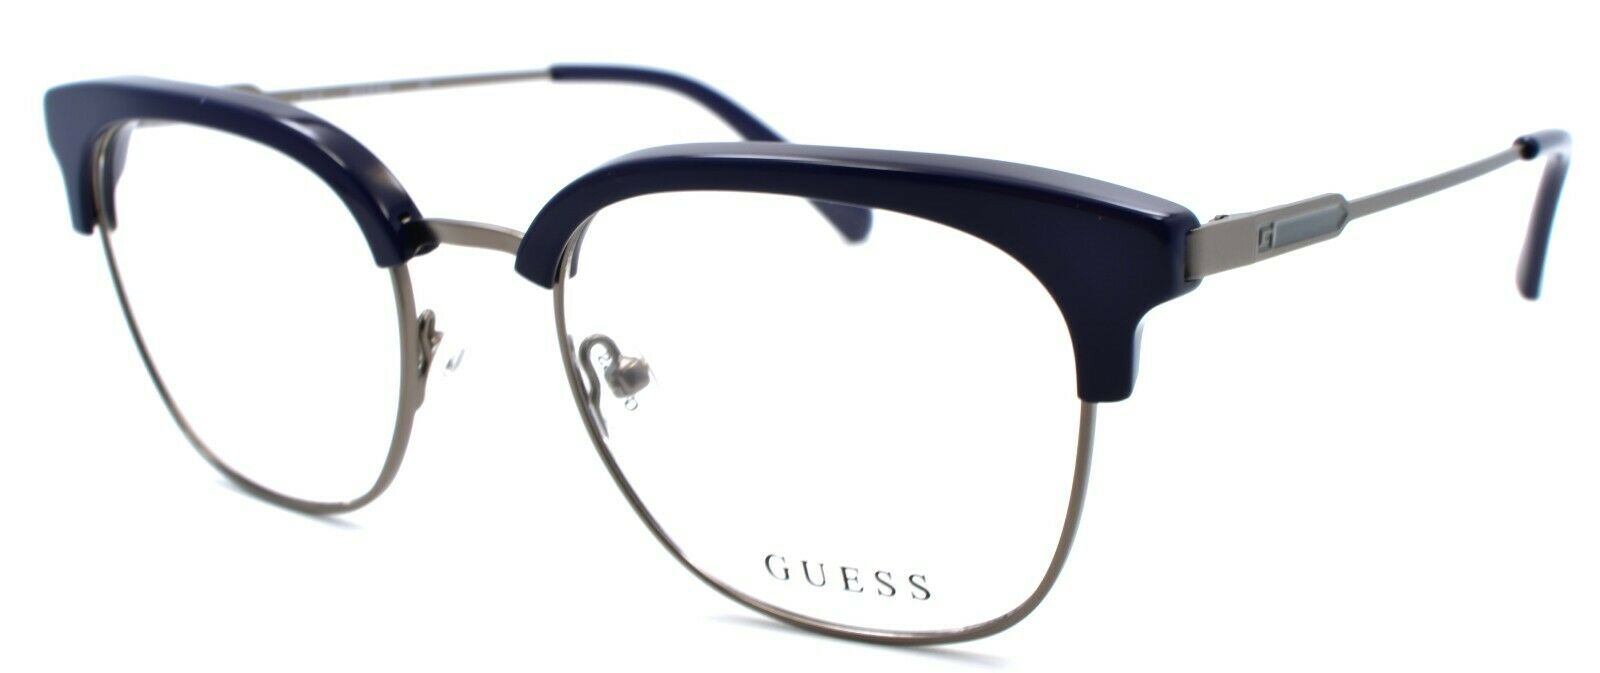 1-GUESS GU50006 090 Men's Eyeglasses Frames 50-20-145 Blue / Ruthenium-889214157690-IKSpecs